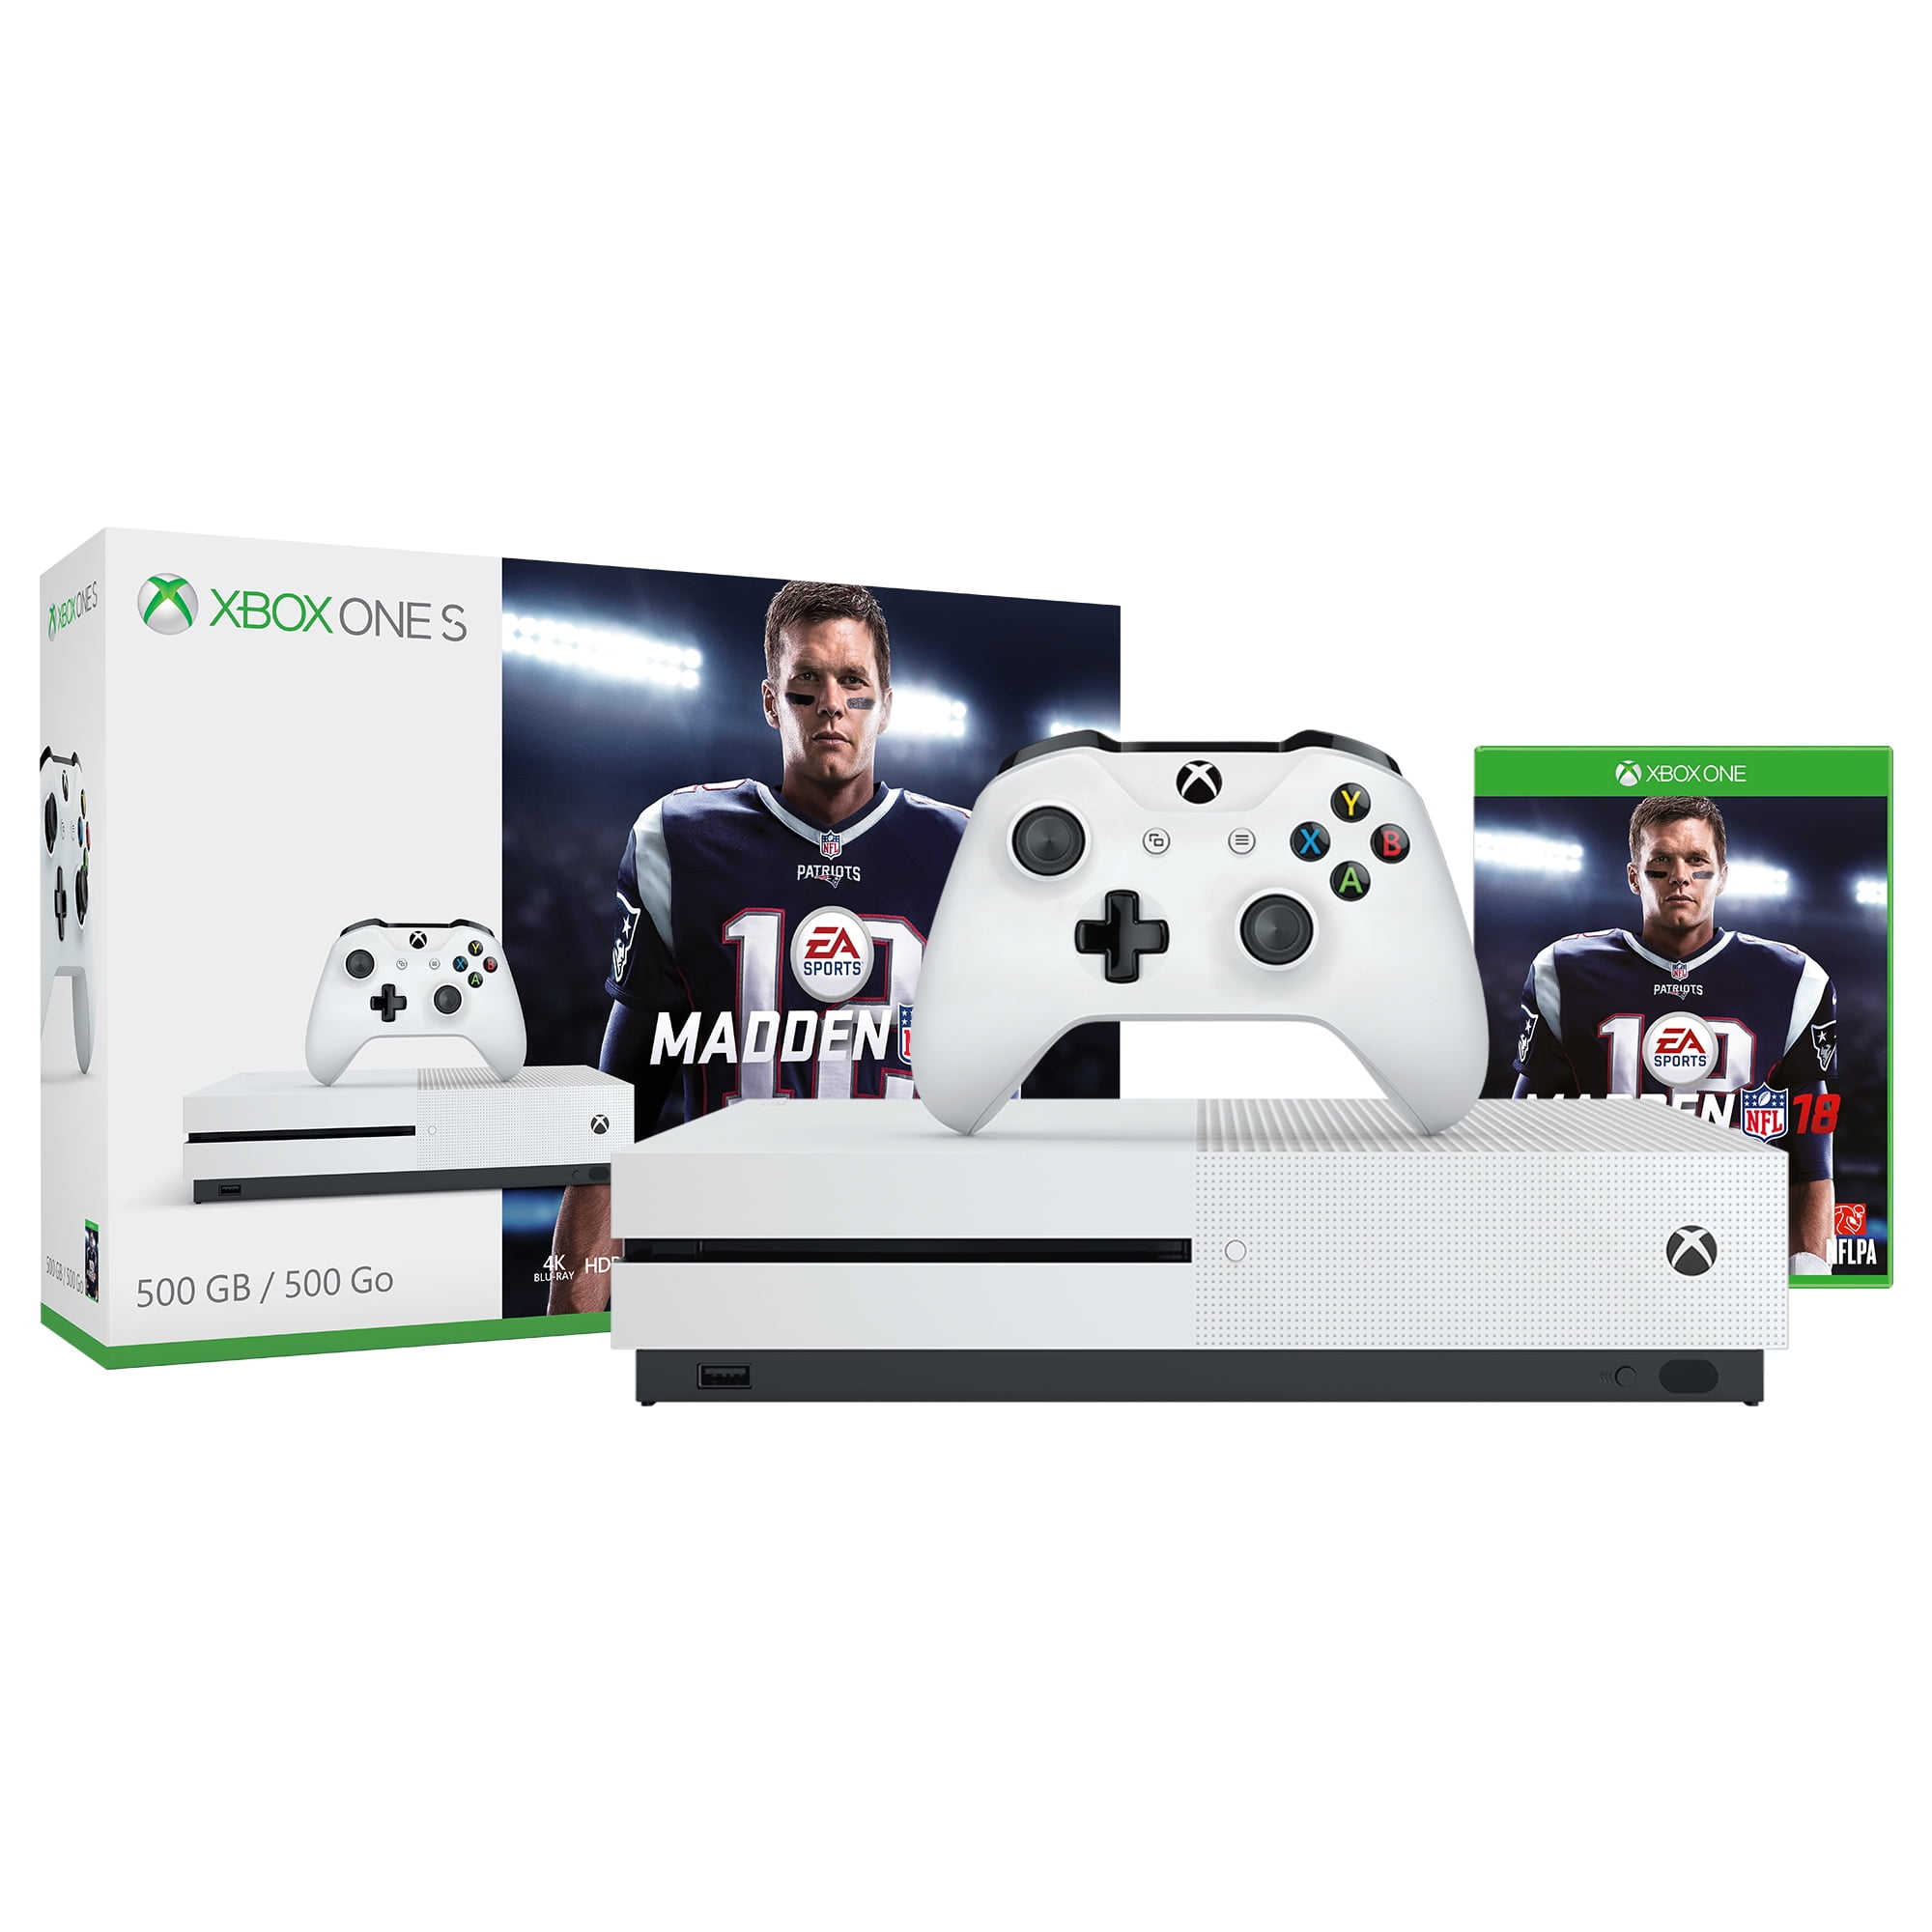 Microsoft Xbox One S 500gb Madden Nfl 18 Bundle White Zq9